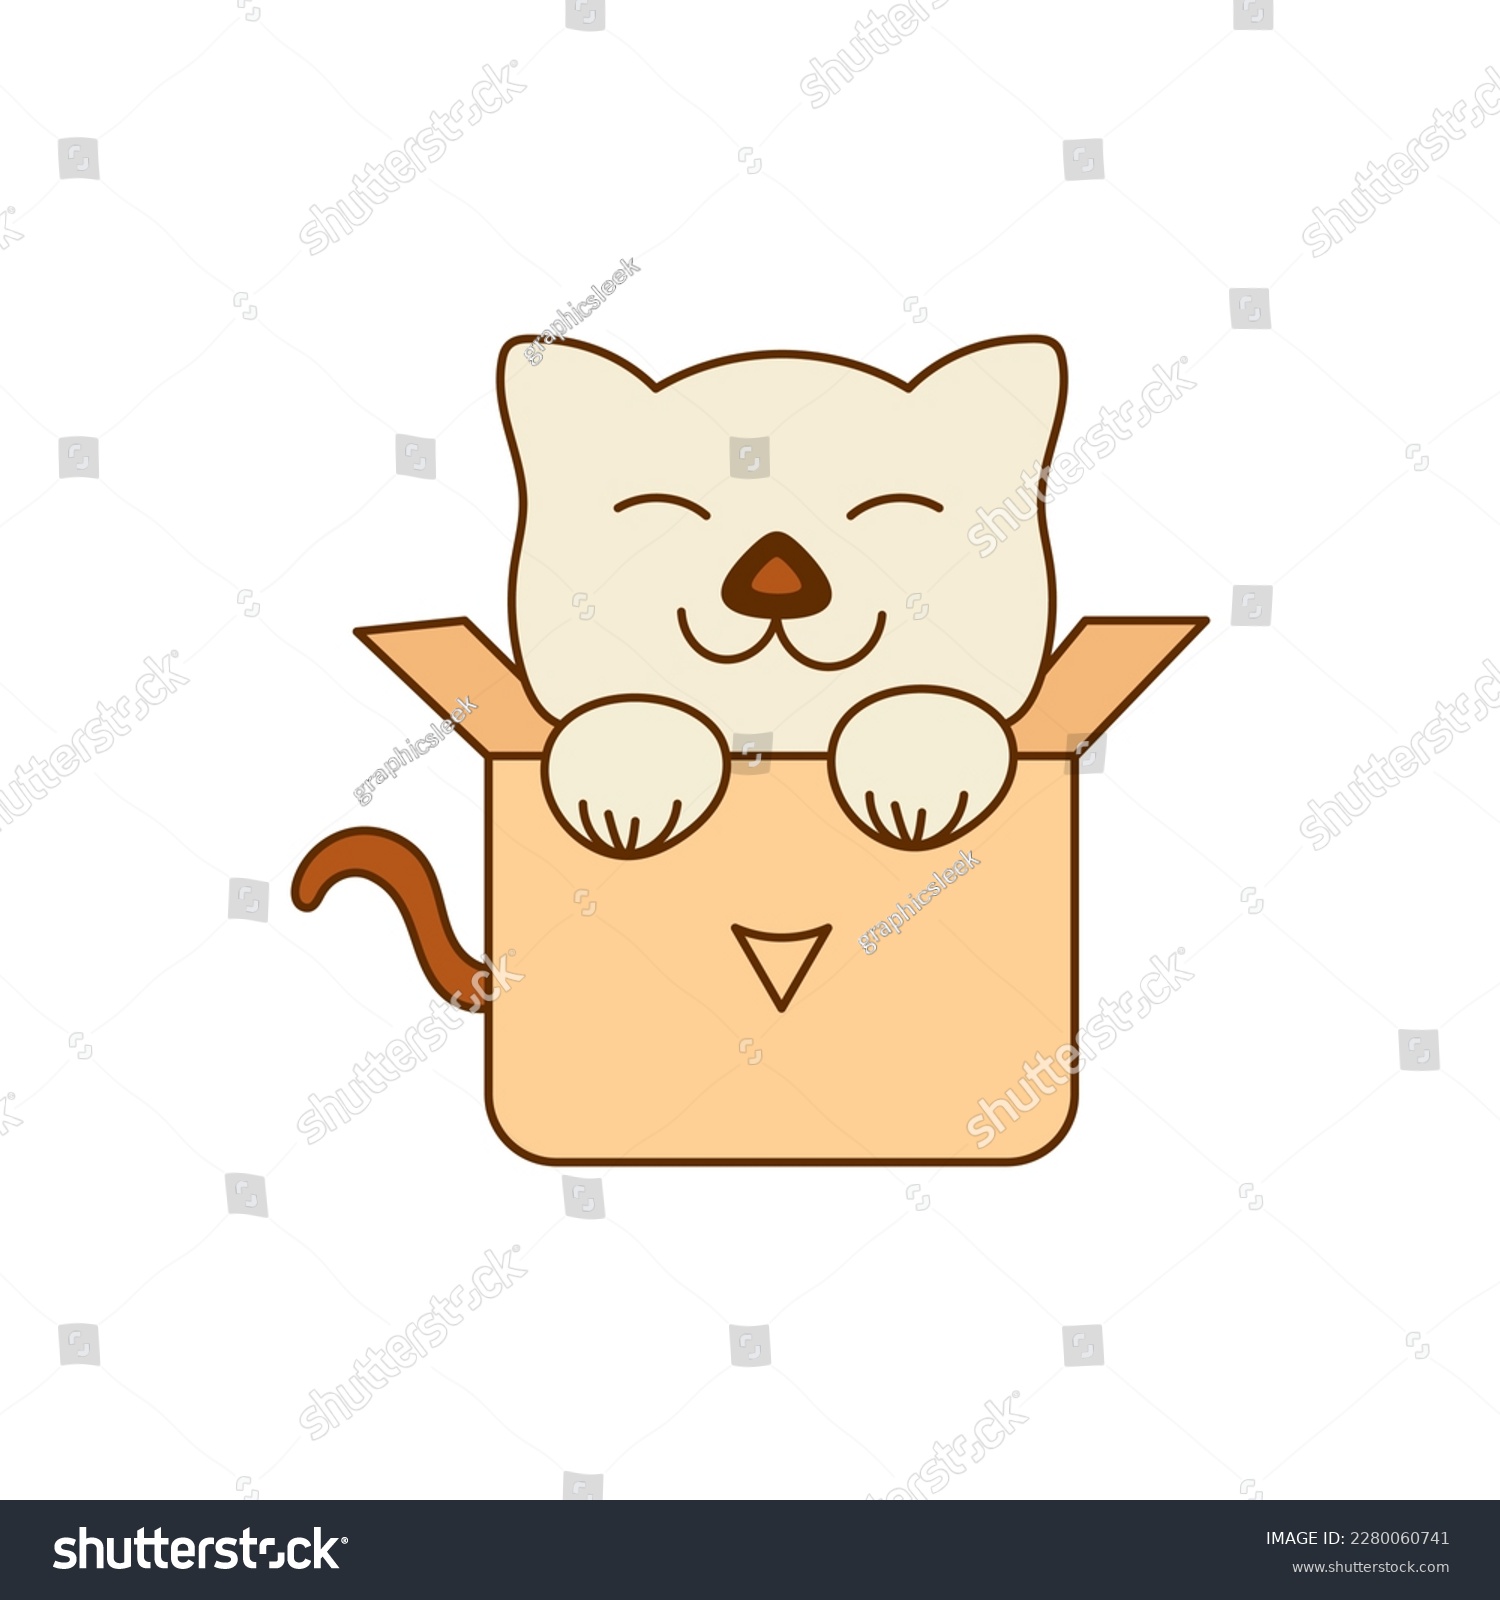 SVG of cute cat in box cartoon a sticker template of cat cartoon character svg